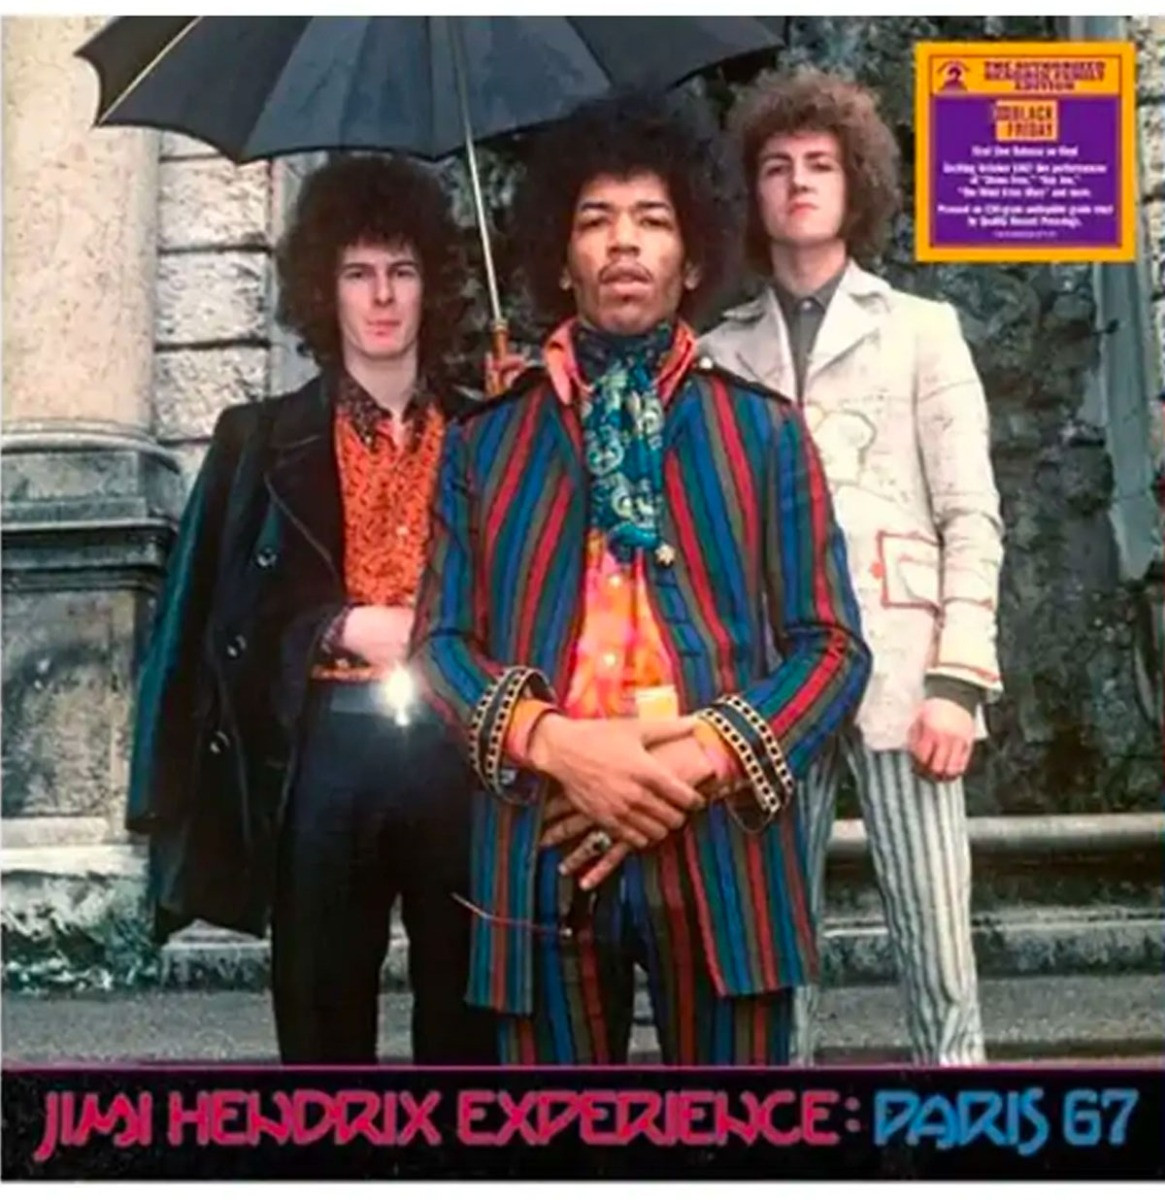 Jimi Hendrix Experience - Paris 67 LP Colored Vinyl (Record Store Day Black Friday)